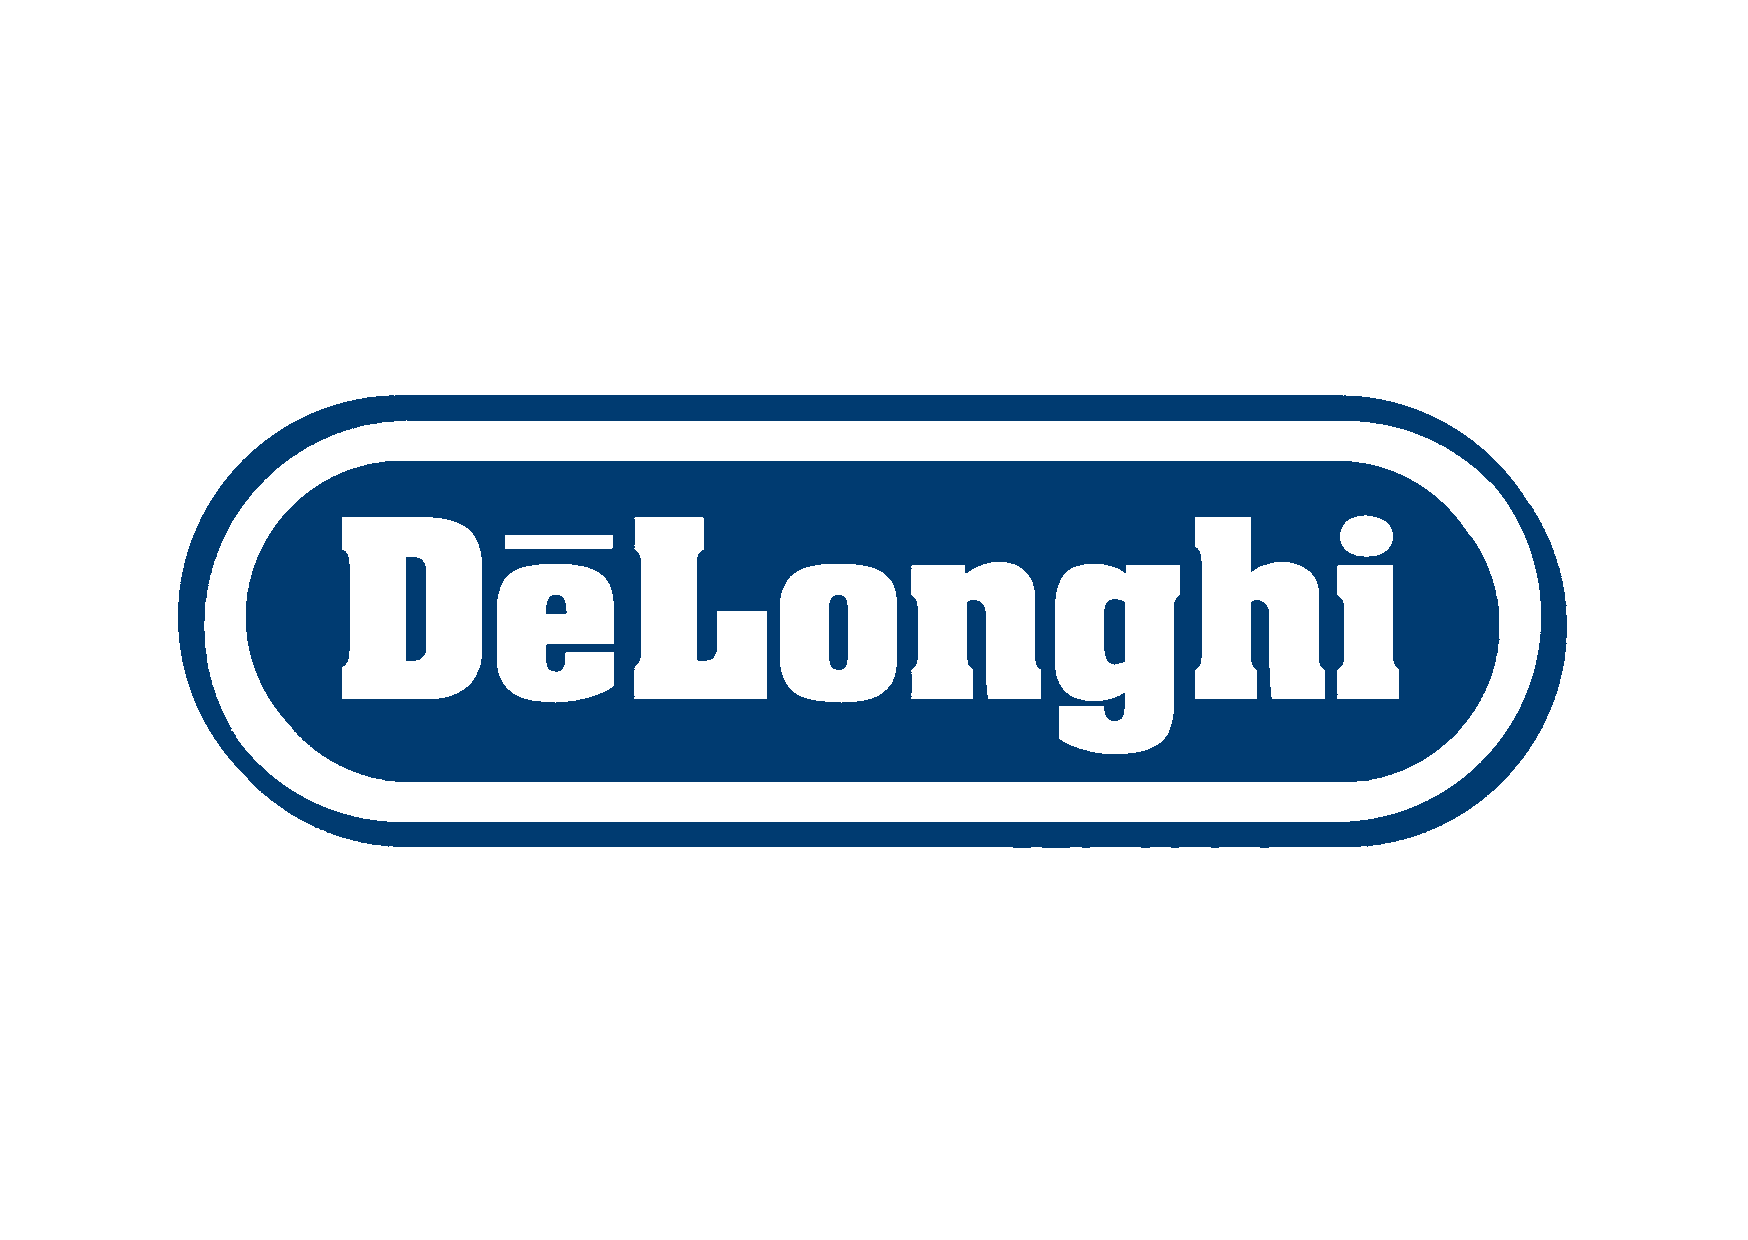 Library Of Delonghi Logo Svg Free Stock Png Files ▻▻▻ Clipart Pluspng.com  - Delonghi, Transparent background PNG HD thumbnail